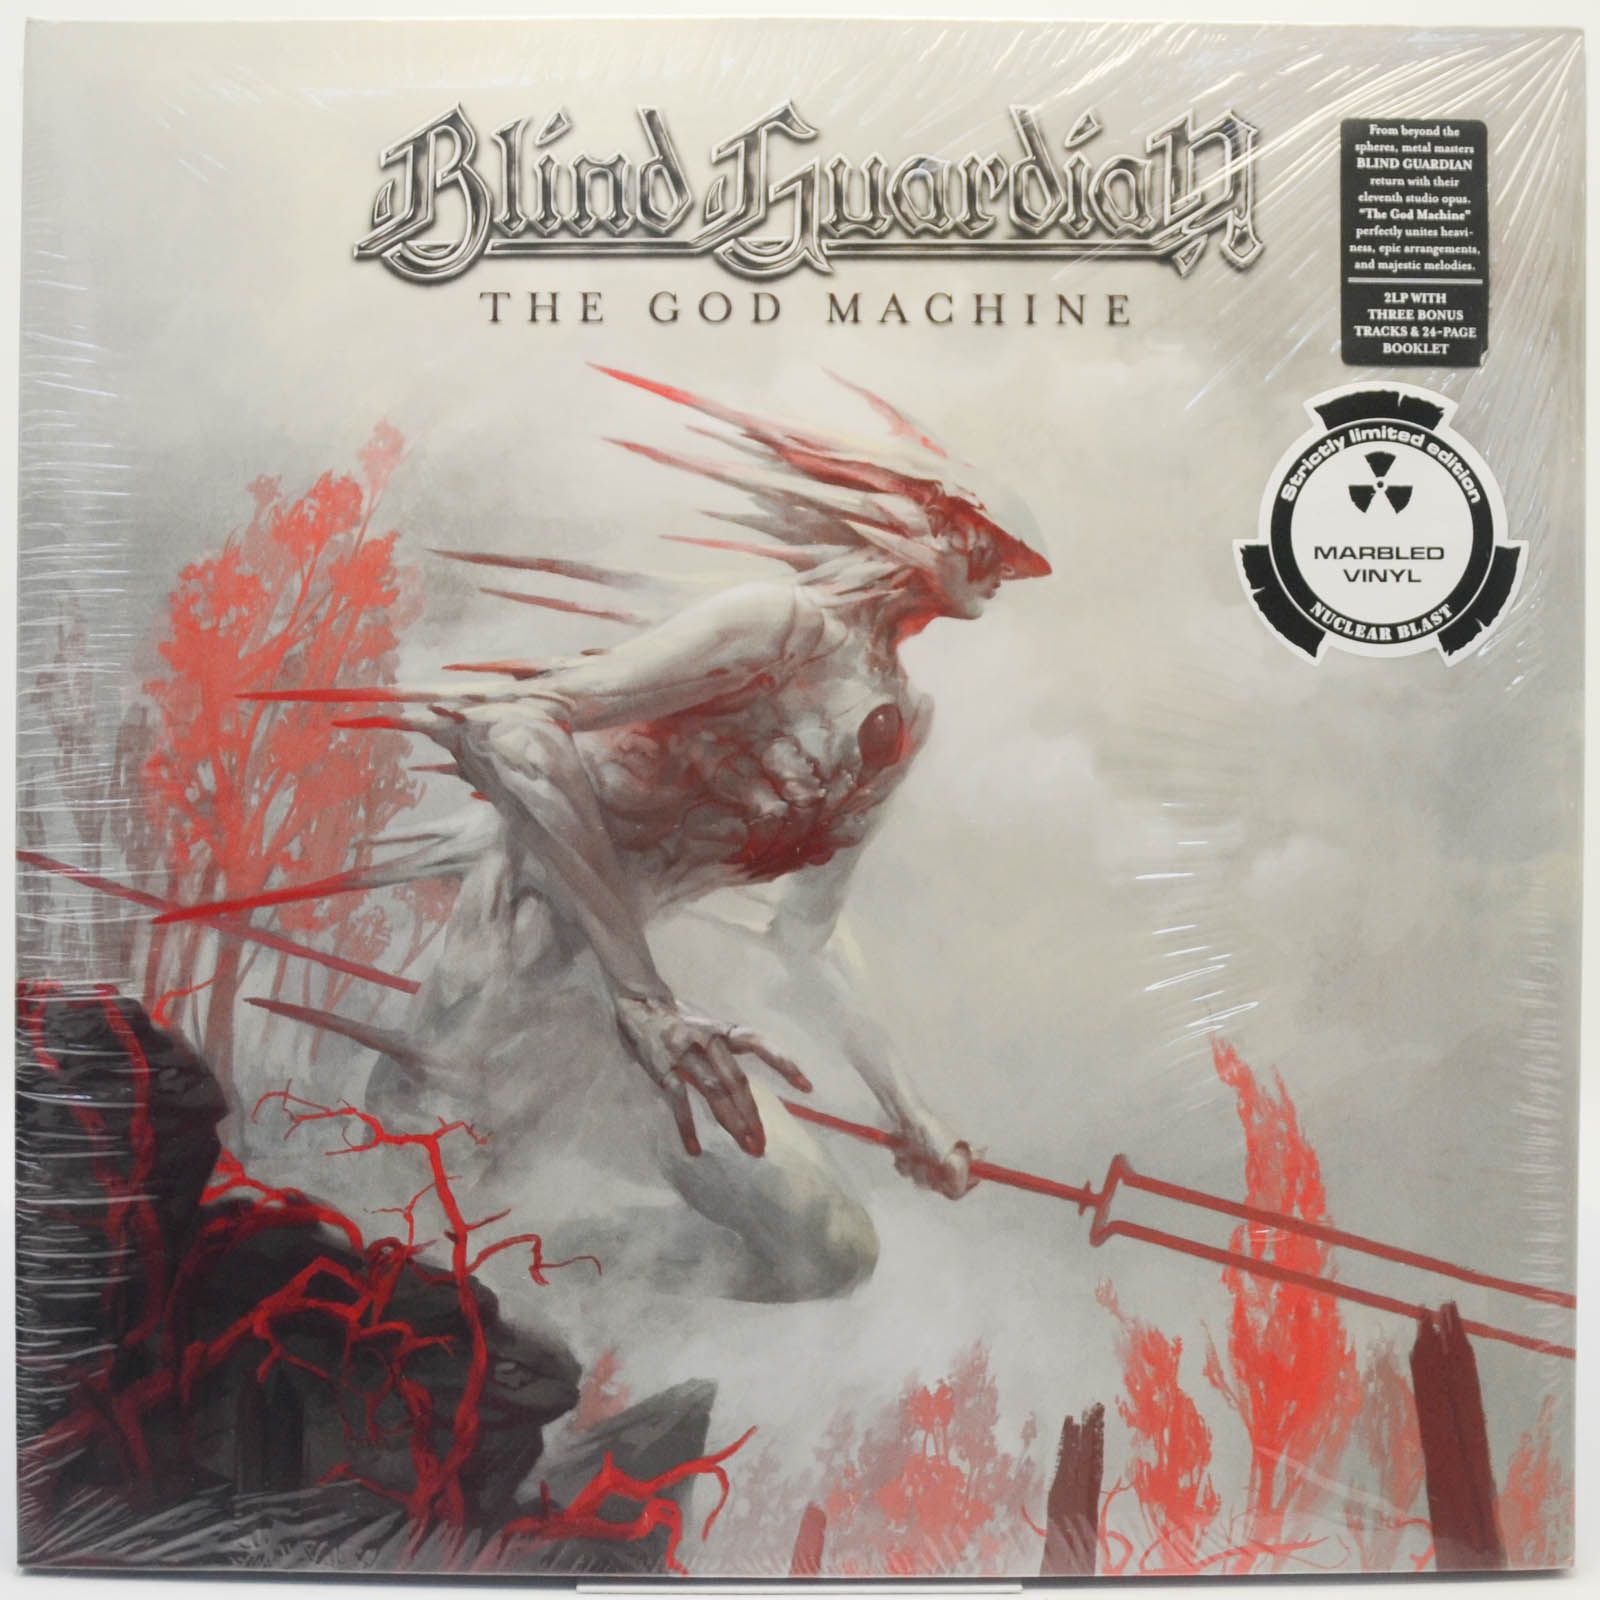 Blind Guardian — The God Machine (2LP), 2022